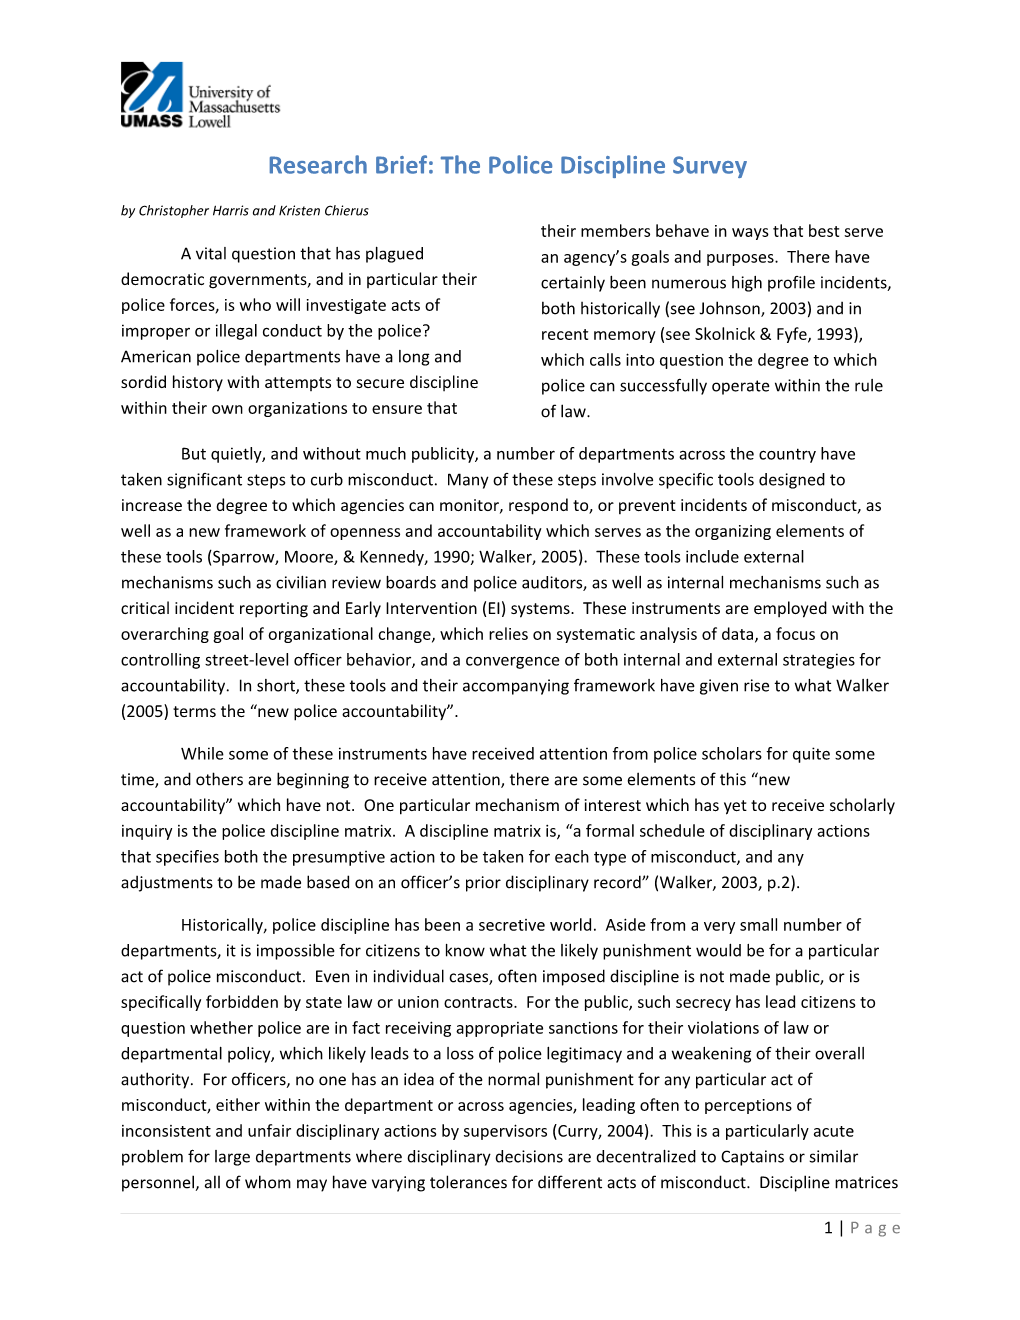 Research Brief: the Police Discipline Survey